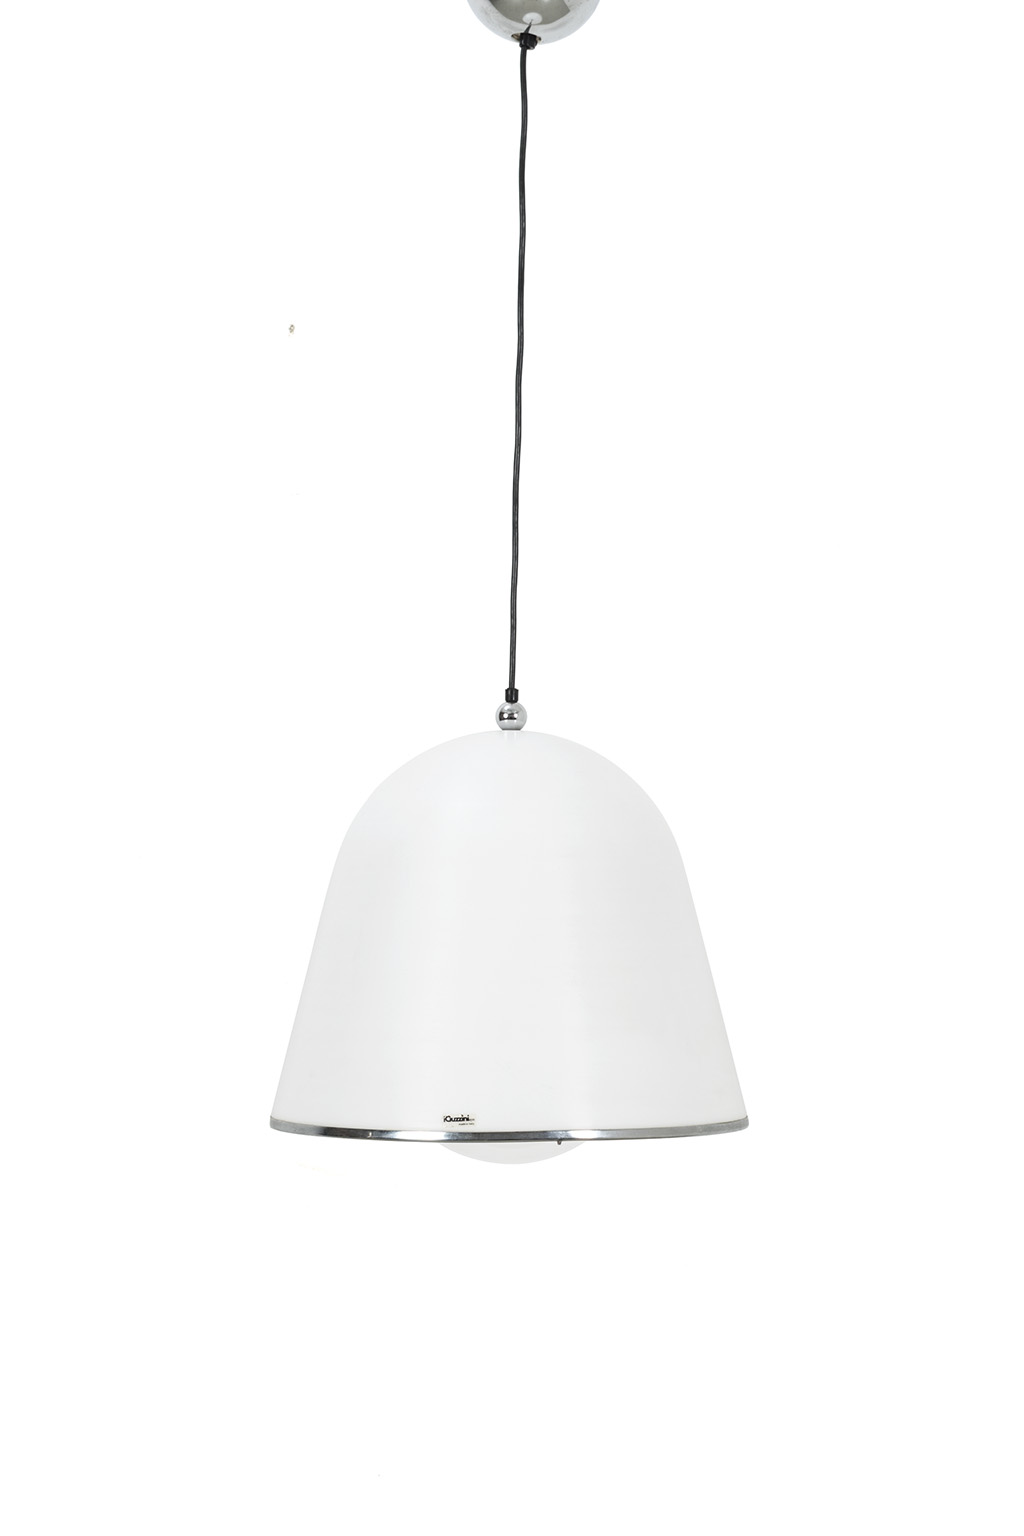 iGuzzini ‘Kuala’ pendant lamp by Franco Bresciani